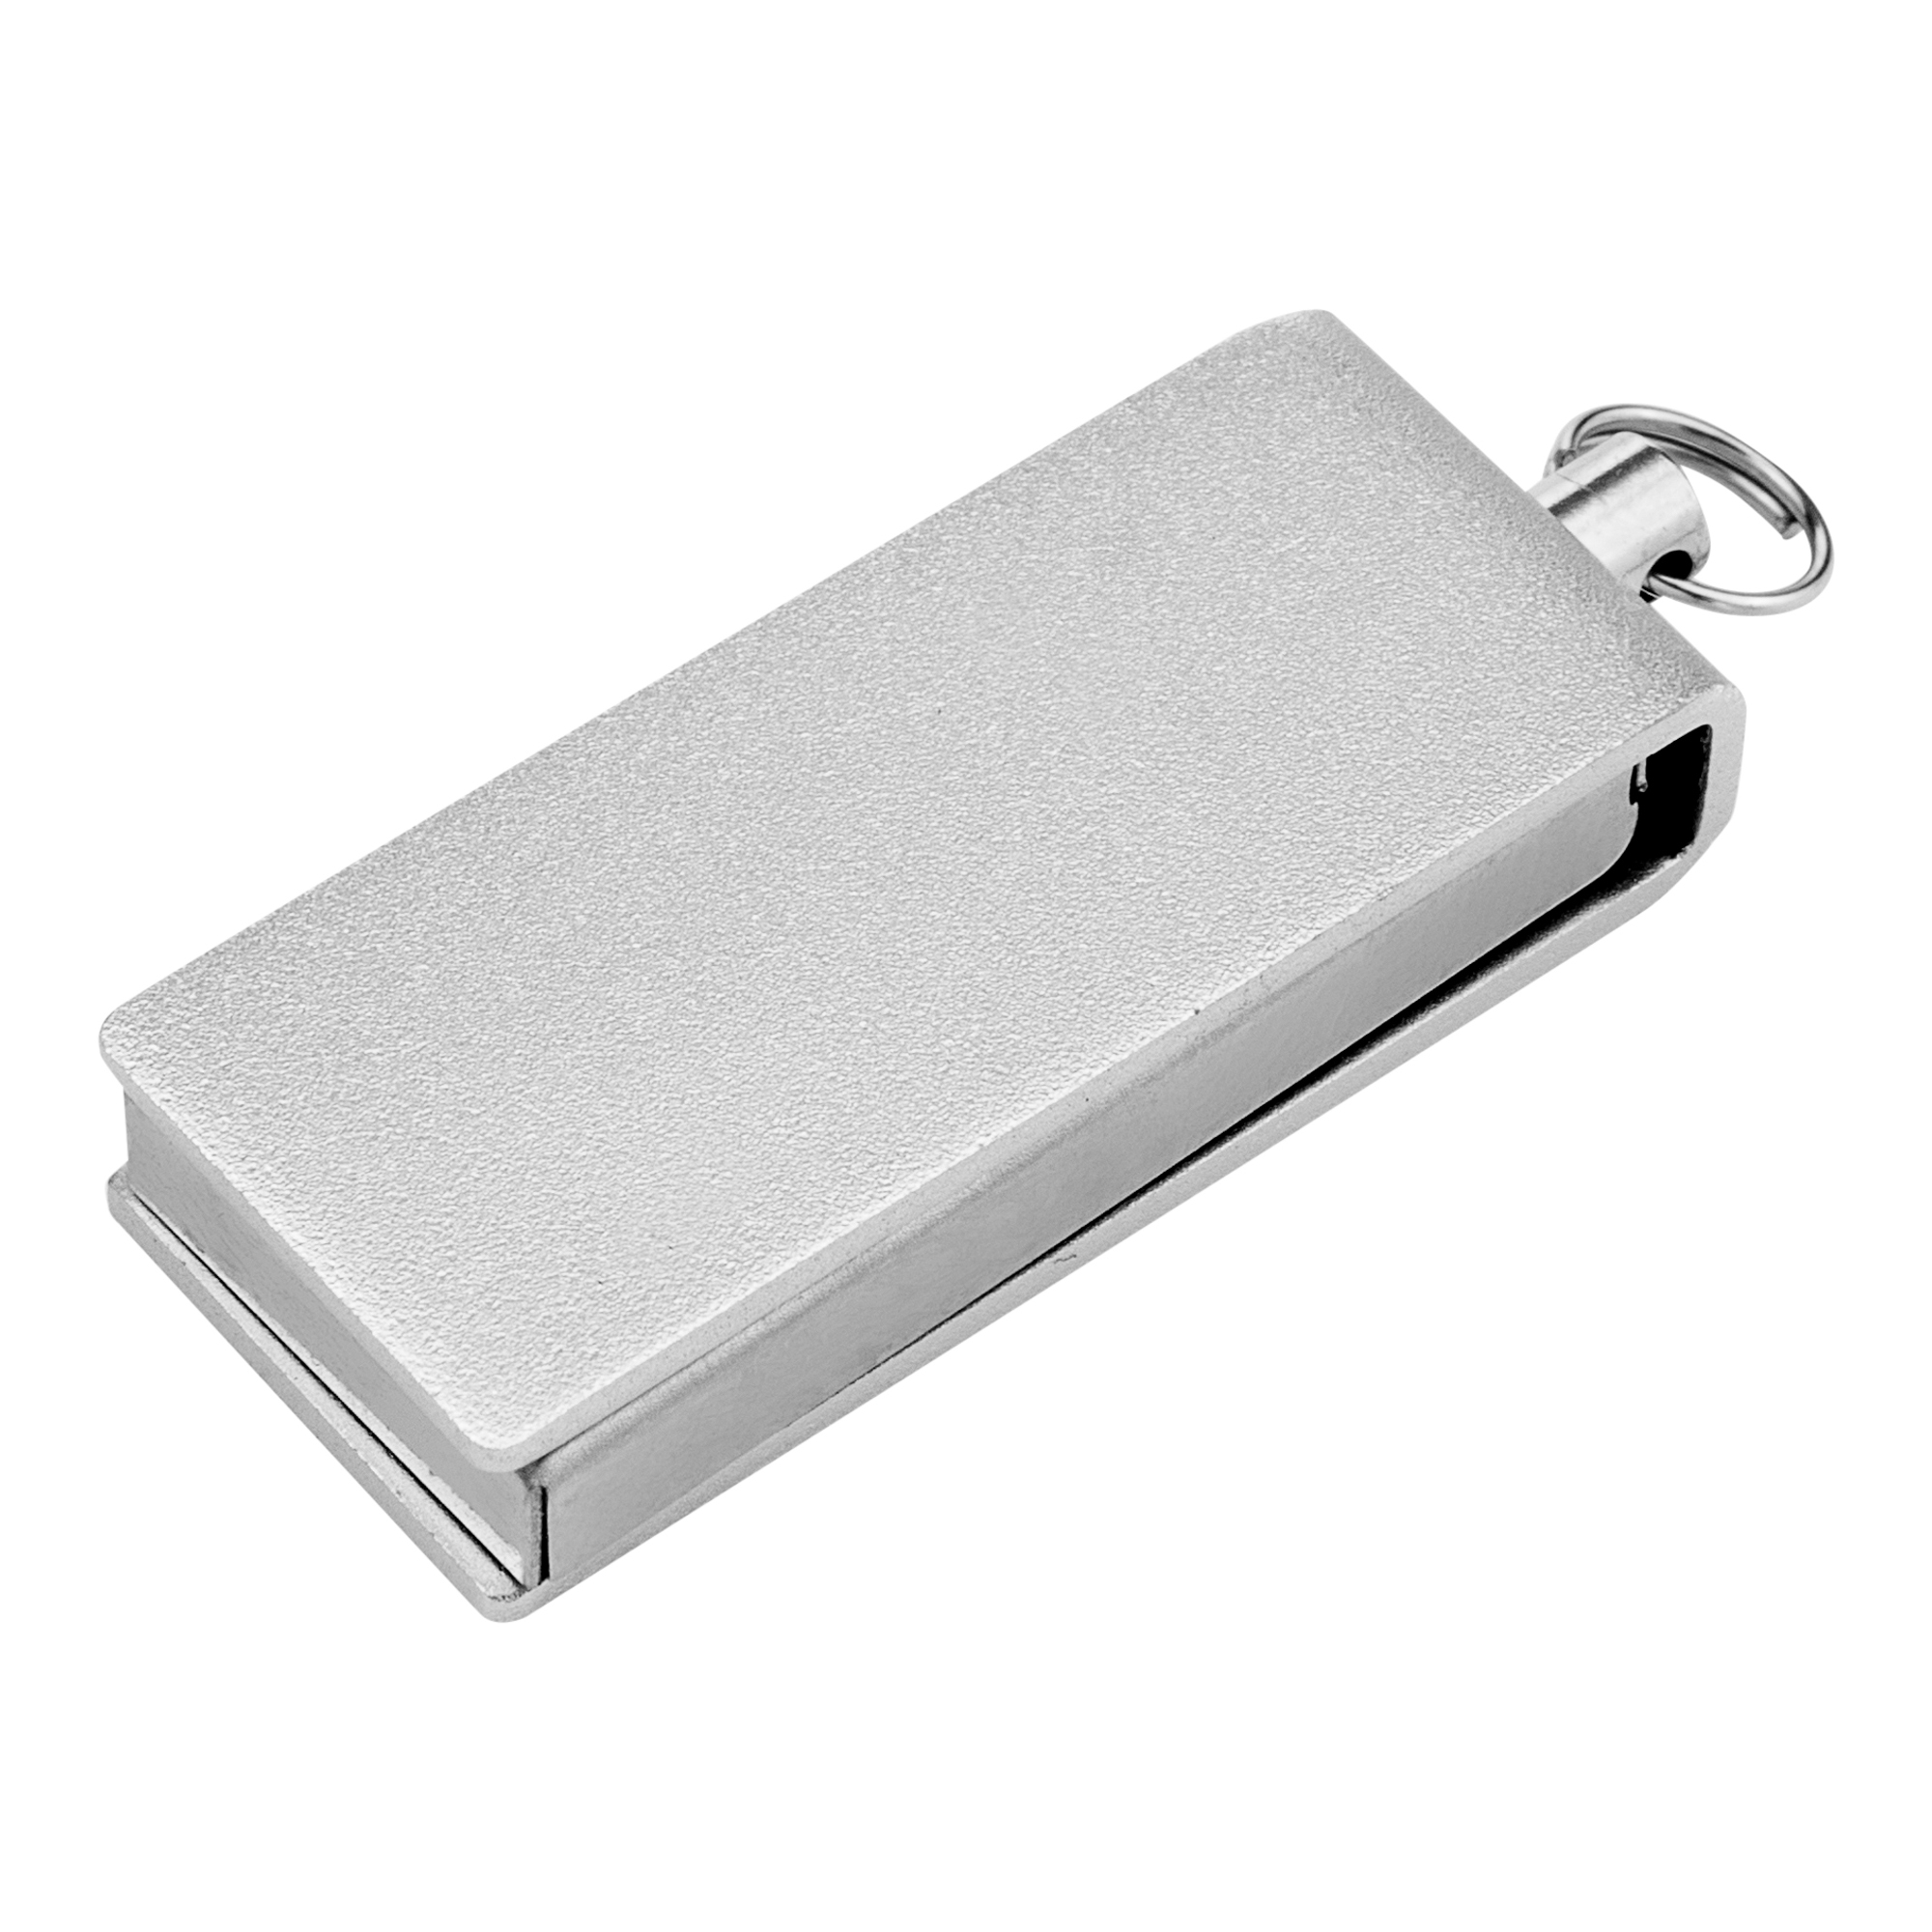 USB-флешка модель 881, цвет S, объем памяти 64 GB